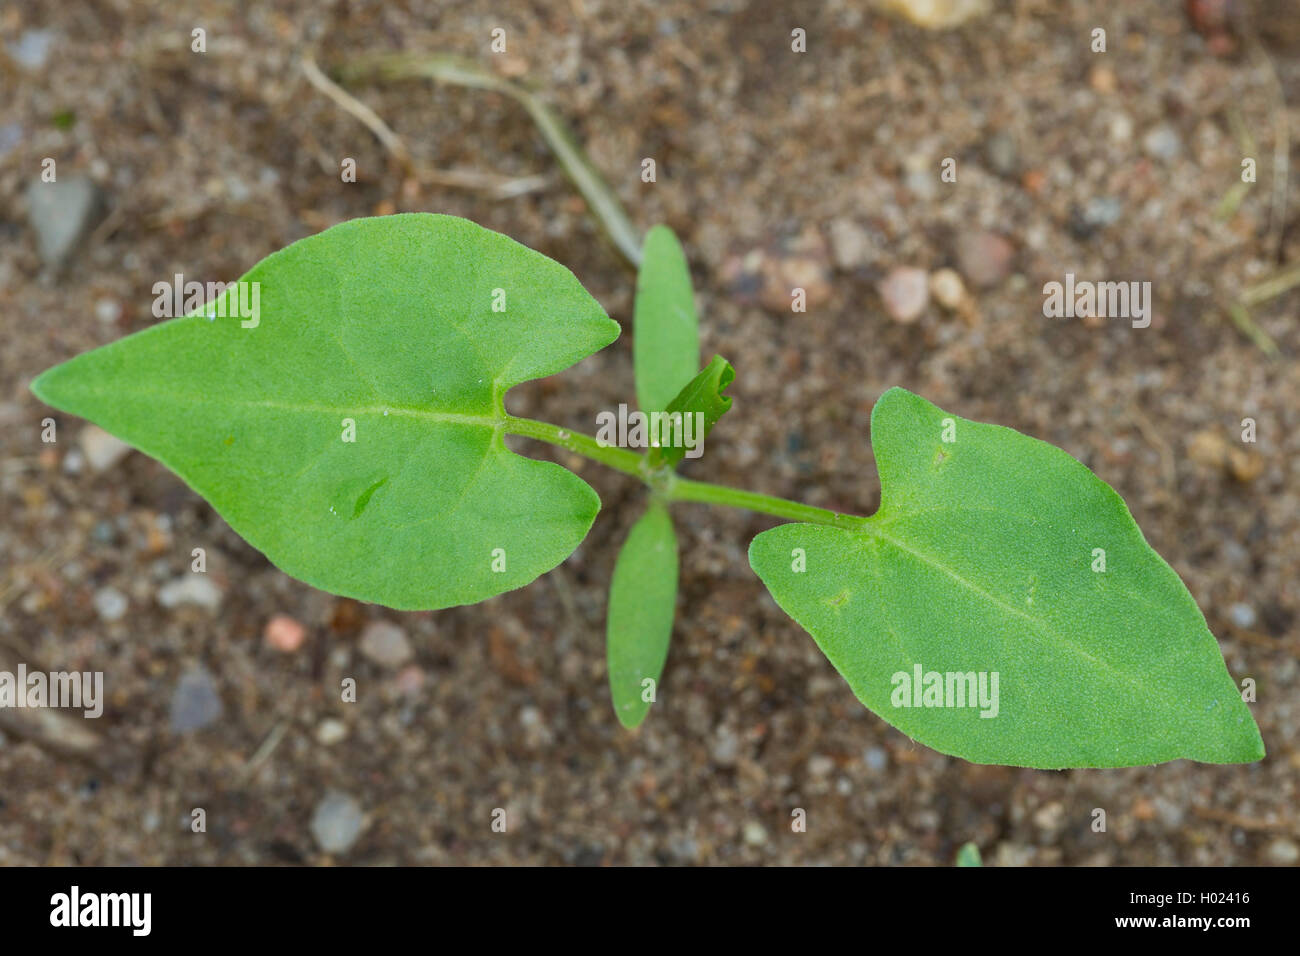 Climbing buckwheat, Black bindweed (Fallopia convolvulus, Polygonum convolvulus, Bilderdykia convolvulus), seedling, Germany Stock Photo